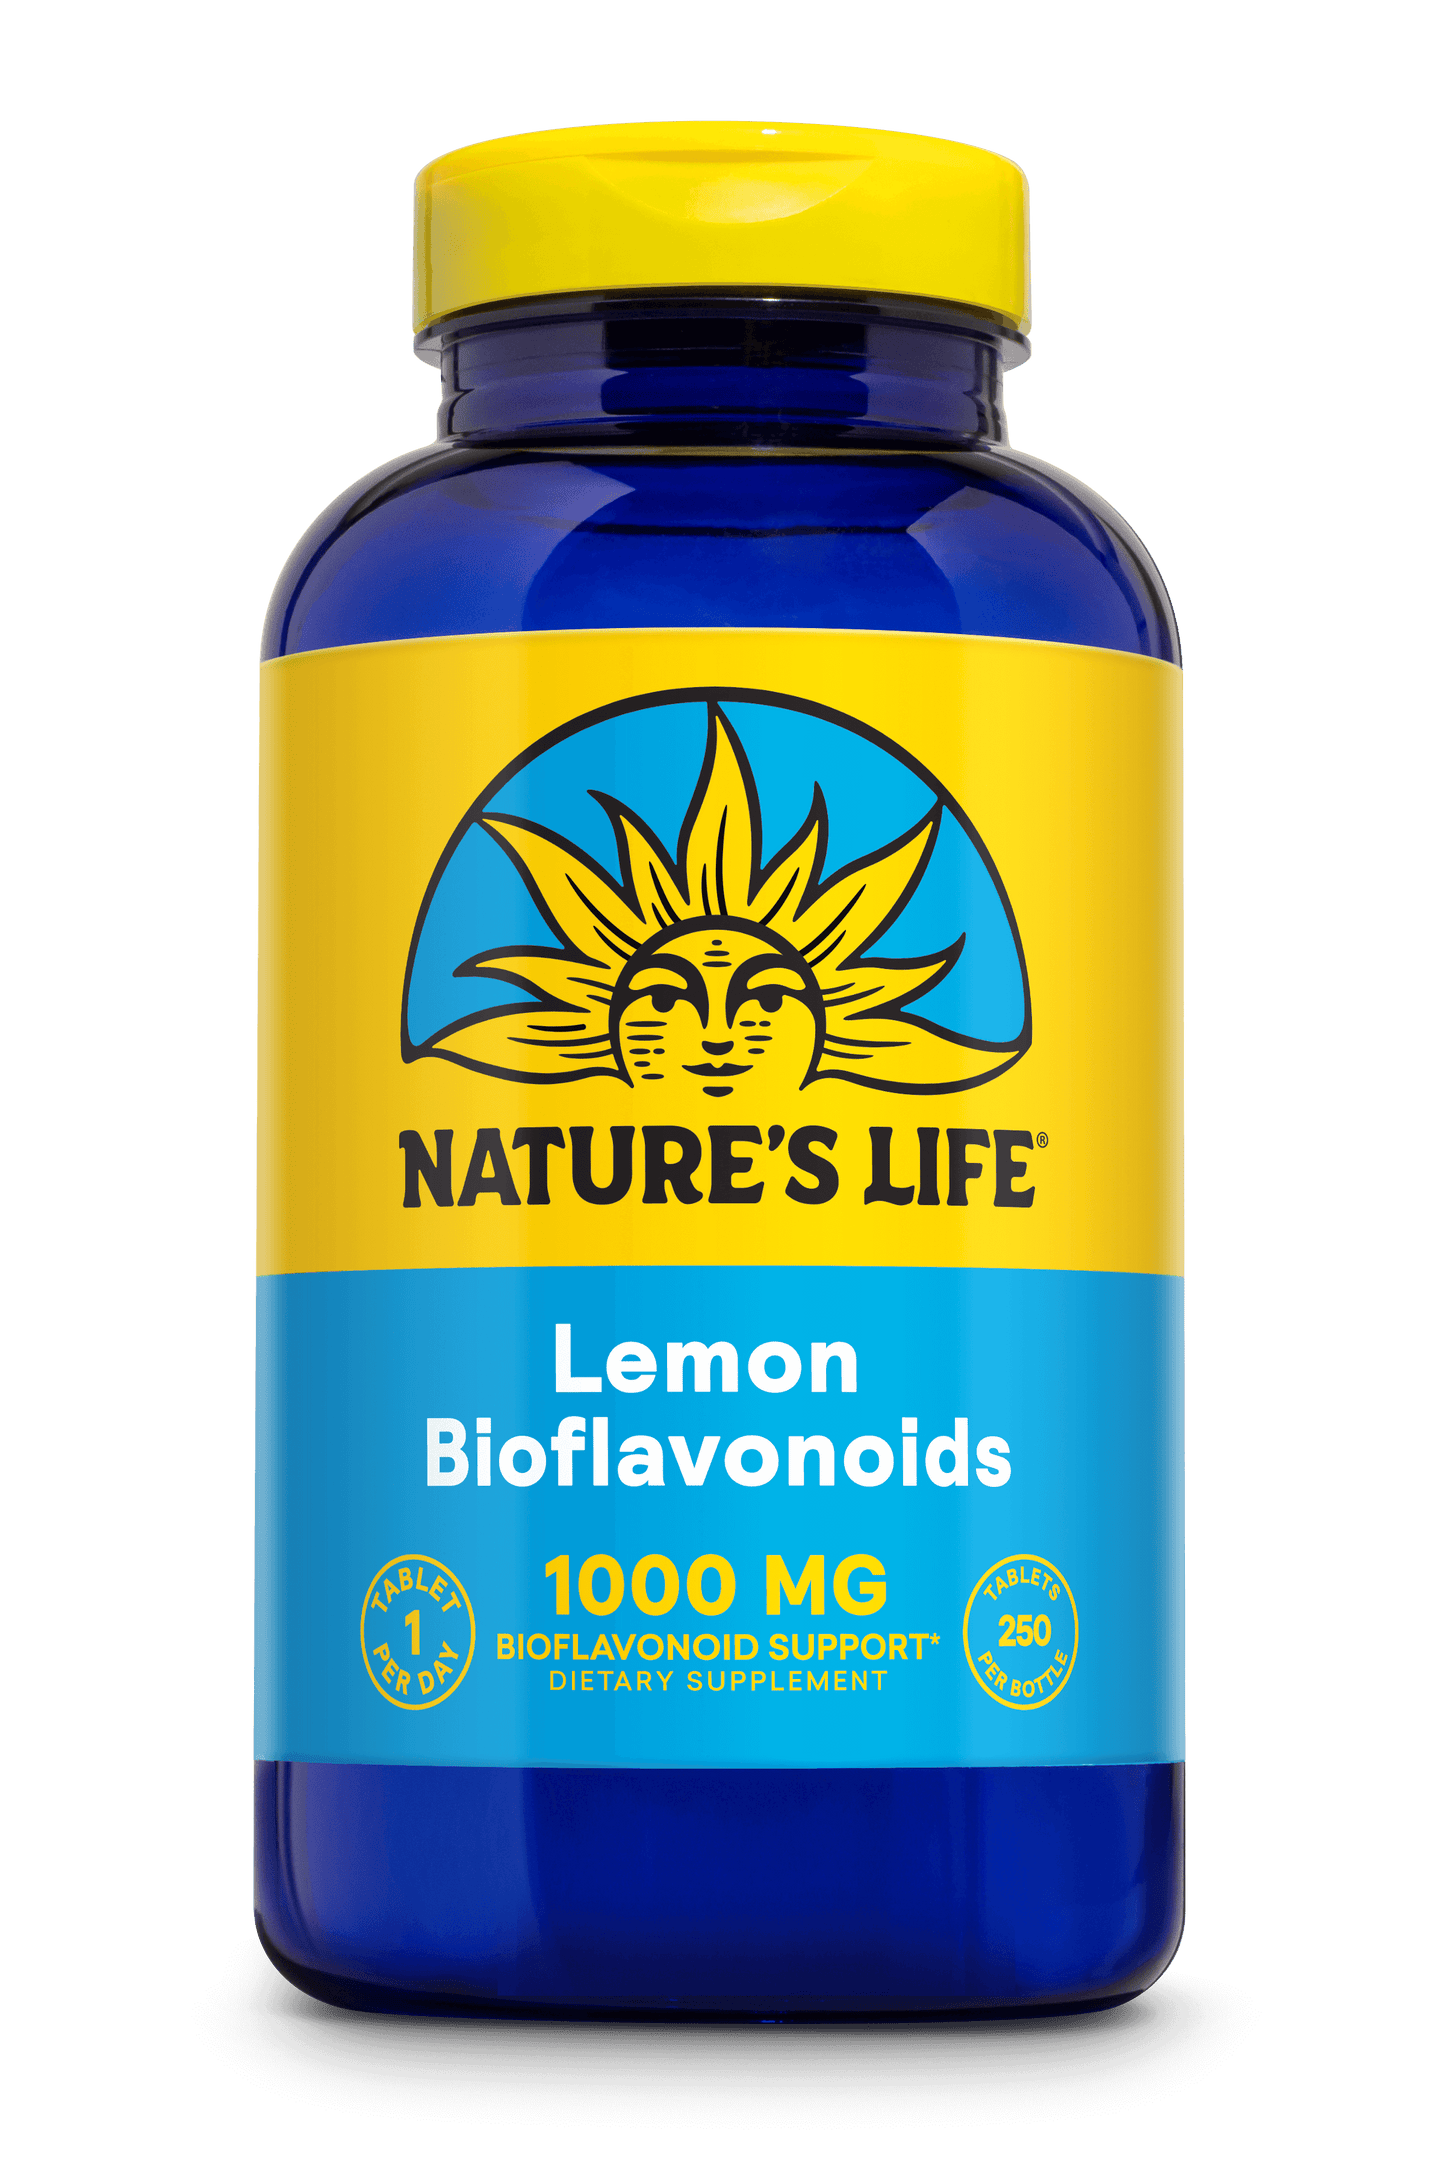 Lemon Bioflavonoids